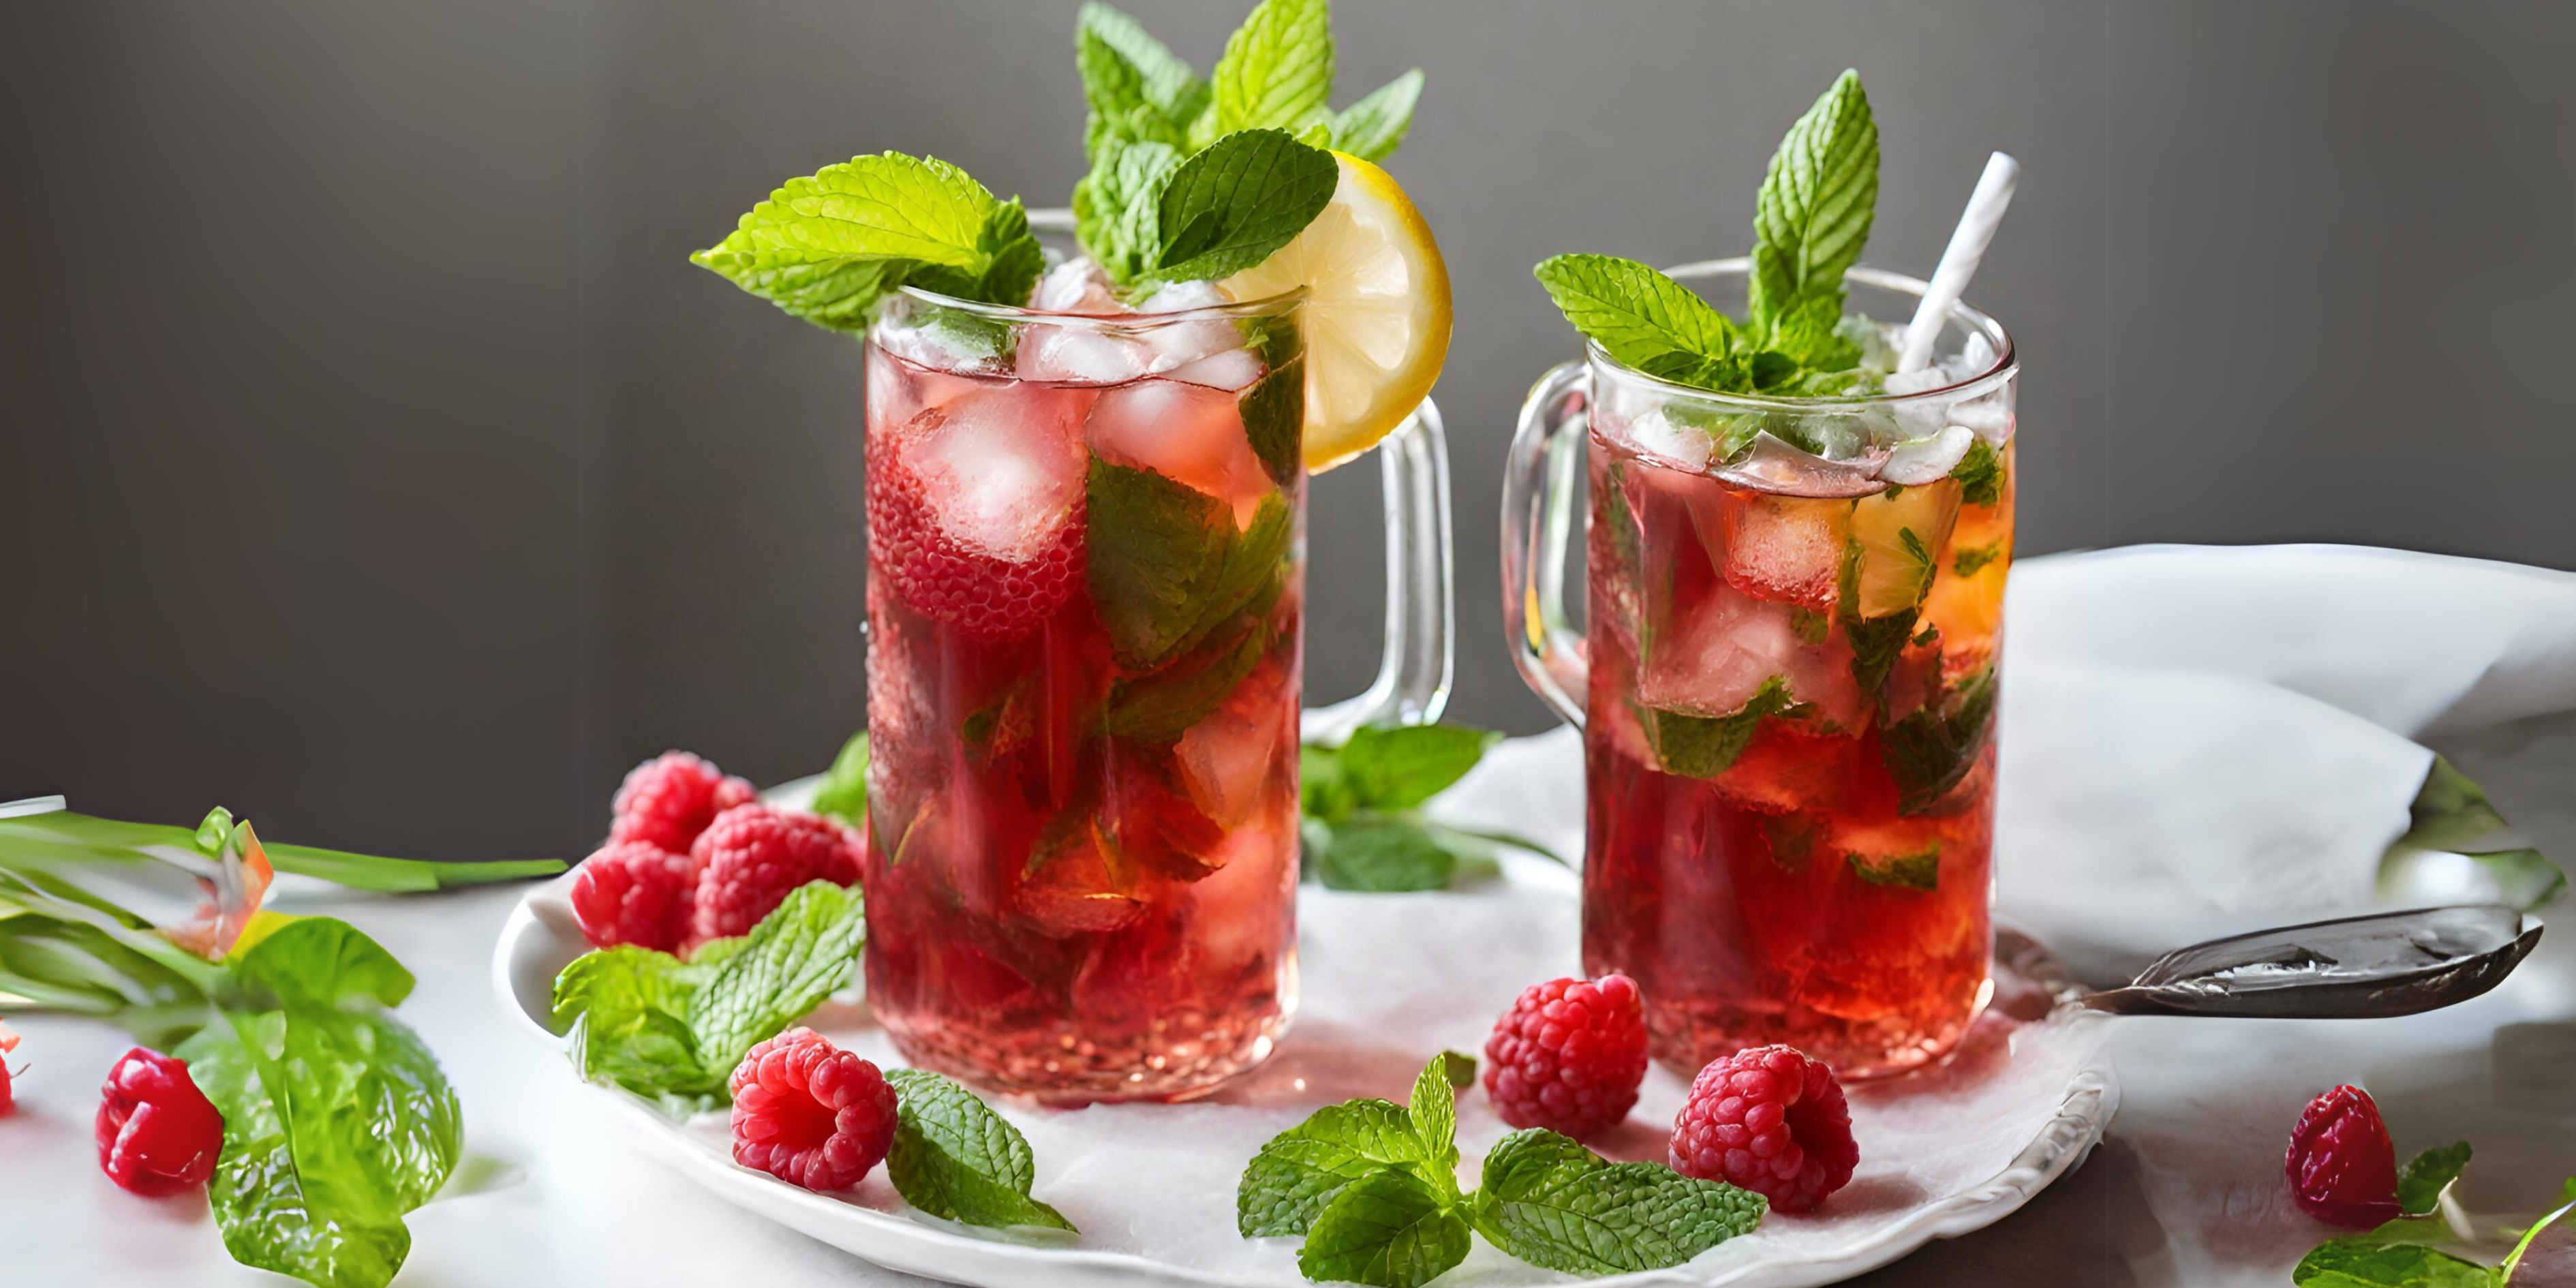 Raspberry Leaf Iced Tea with Lemon and Mint